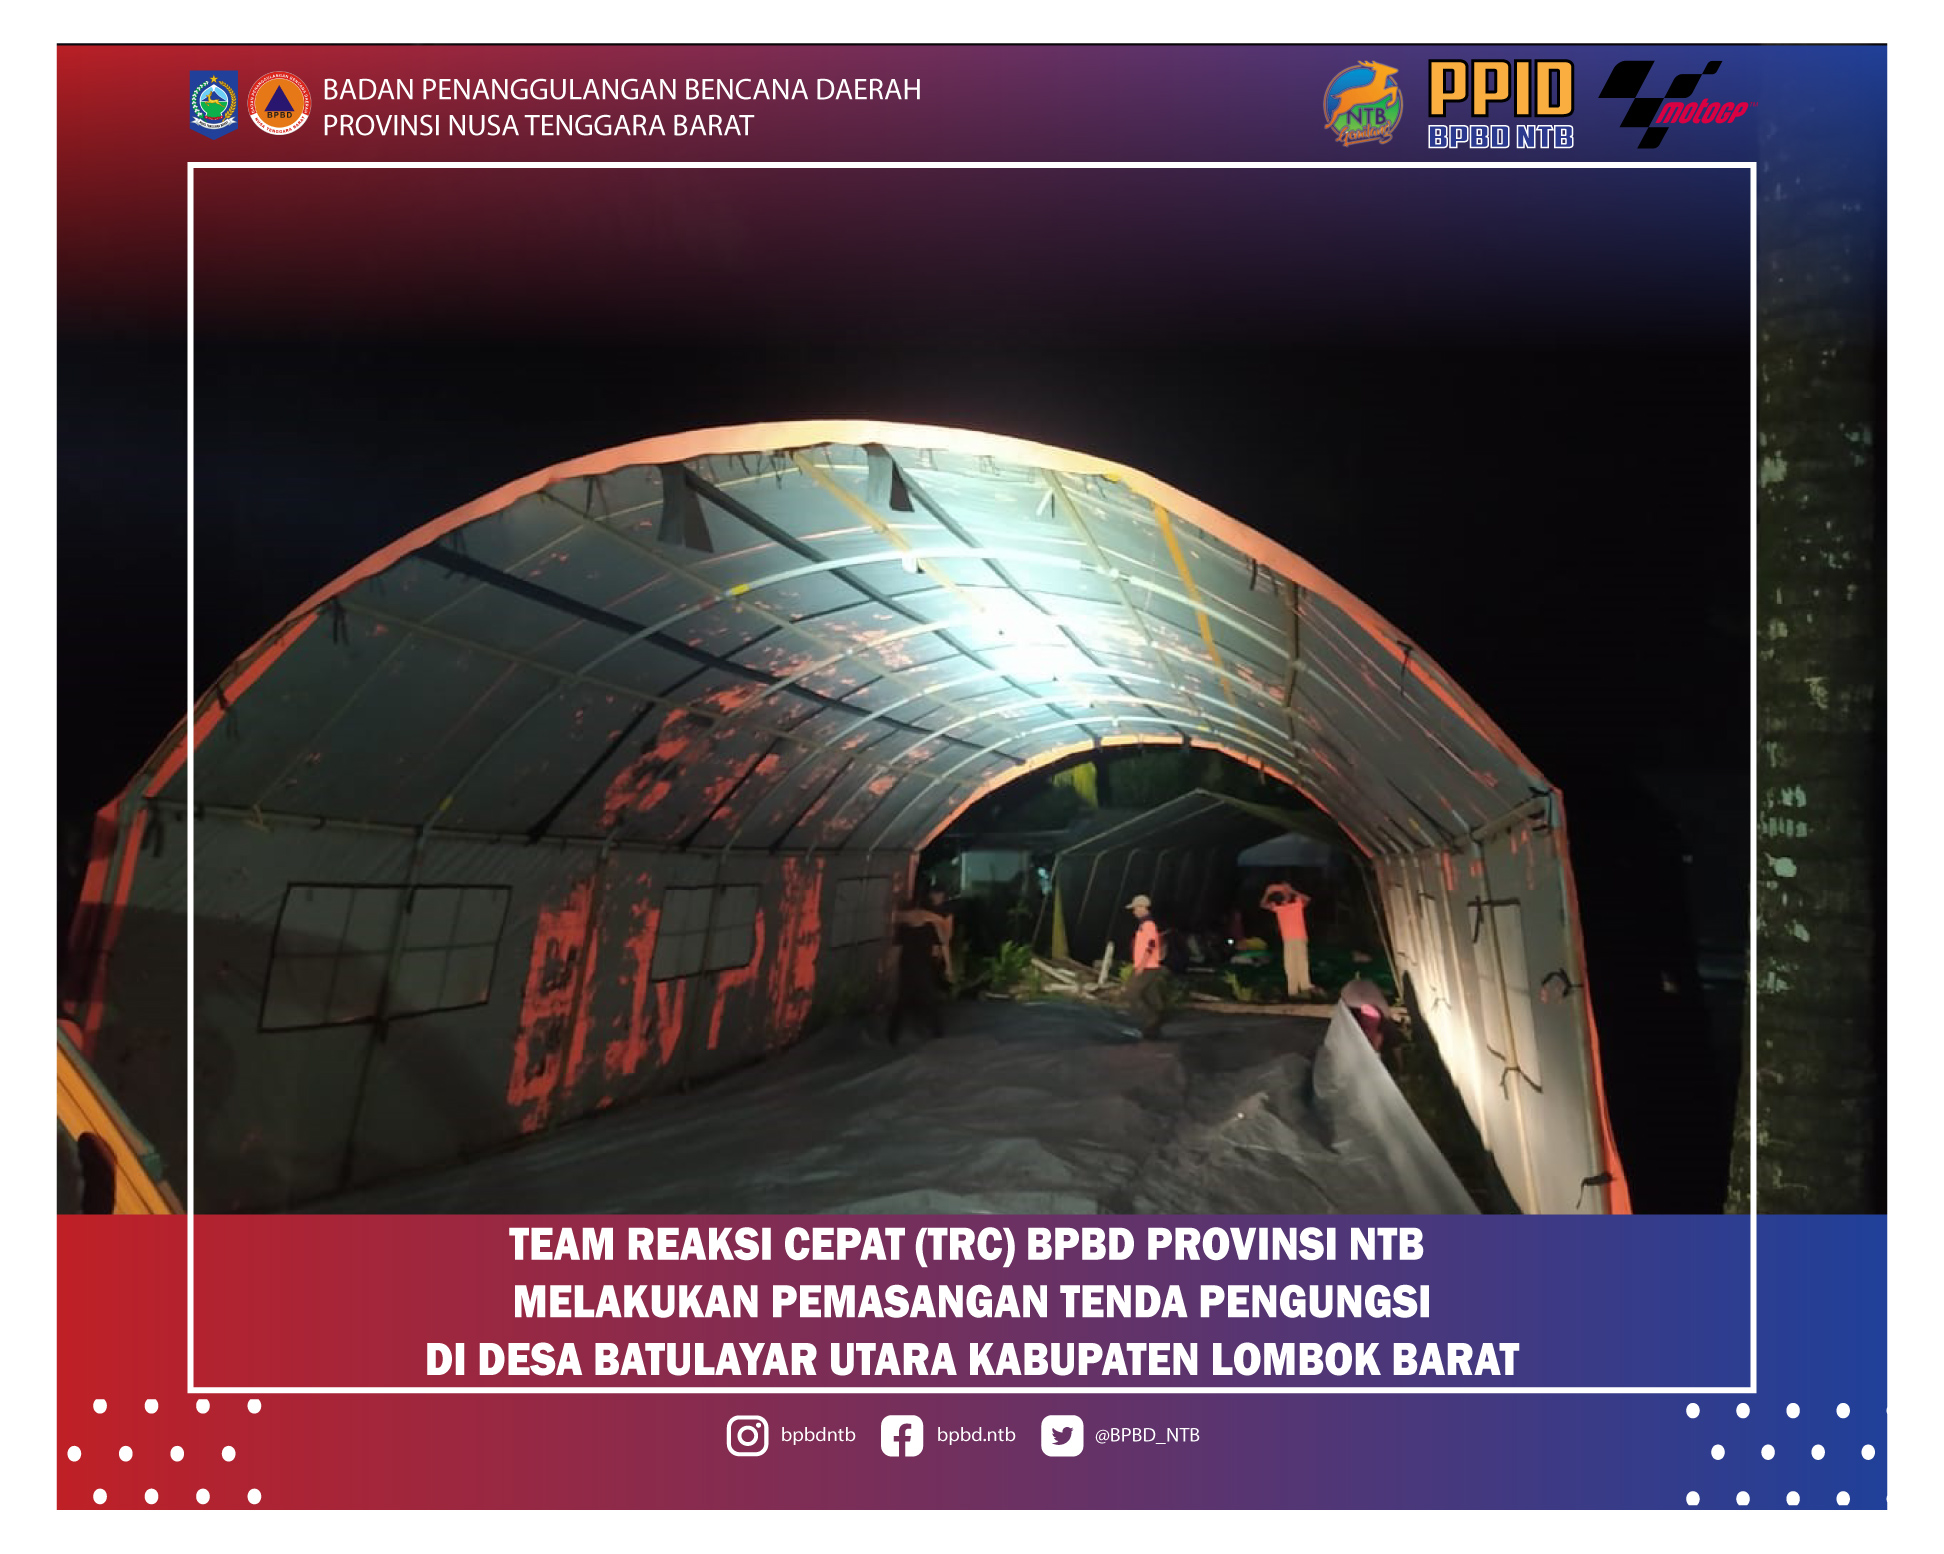 Team reaksi Cepat (TRC) BPBD Provinsi NTB Melakukan Pemassangan Tenda pengunsi Di Desa Batulayar Kabupaten Lombok Barat (Rabu, 08 Desember 2021)